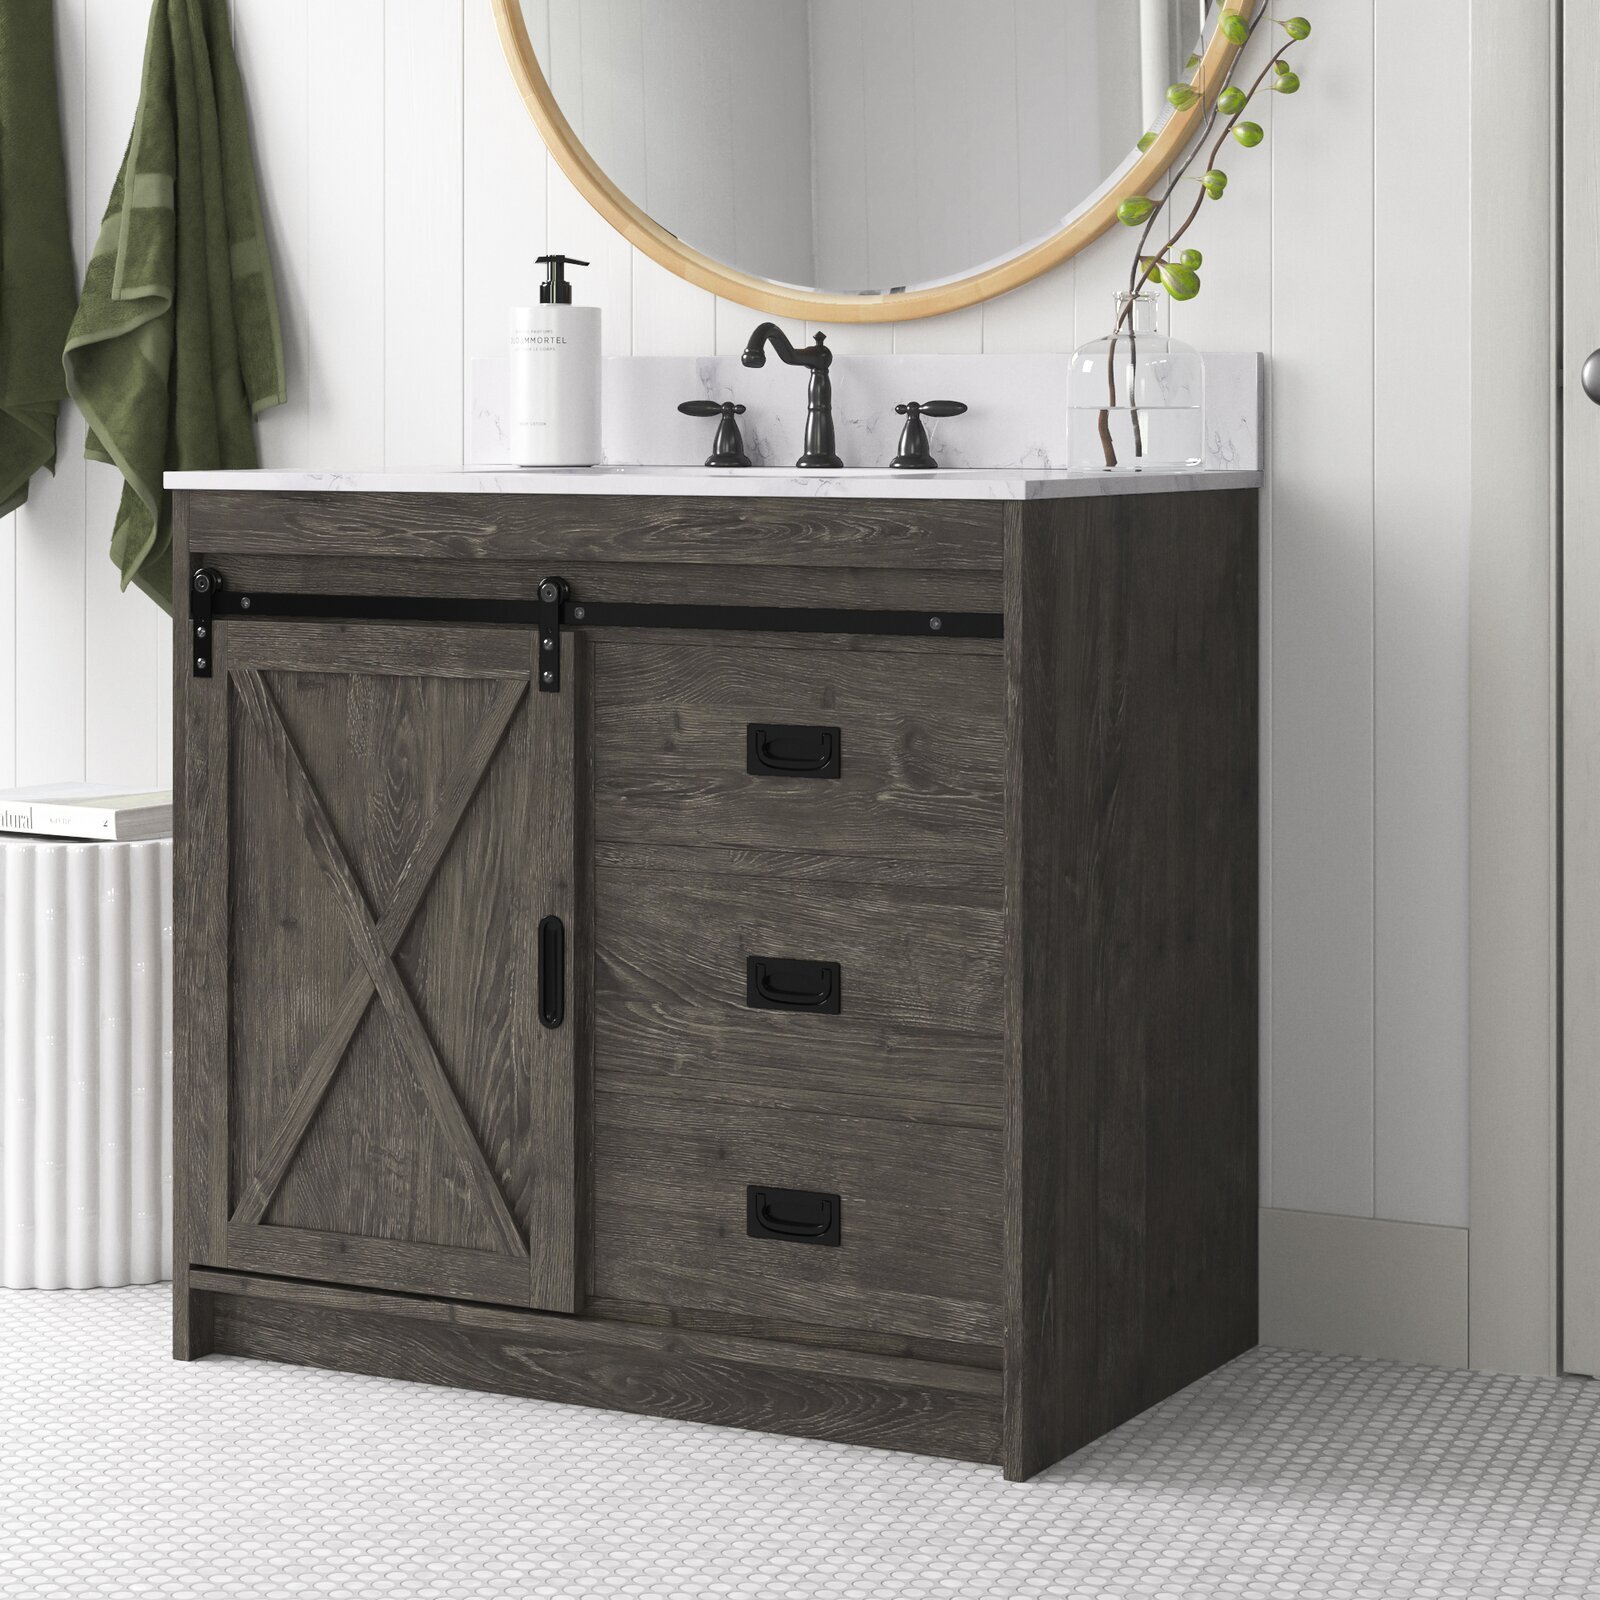 Coastal style bathroom vanity in a rustic design